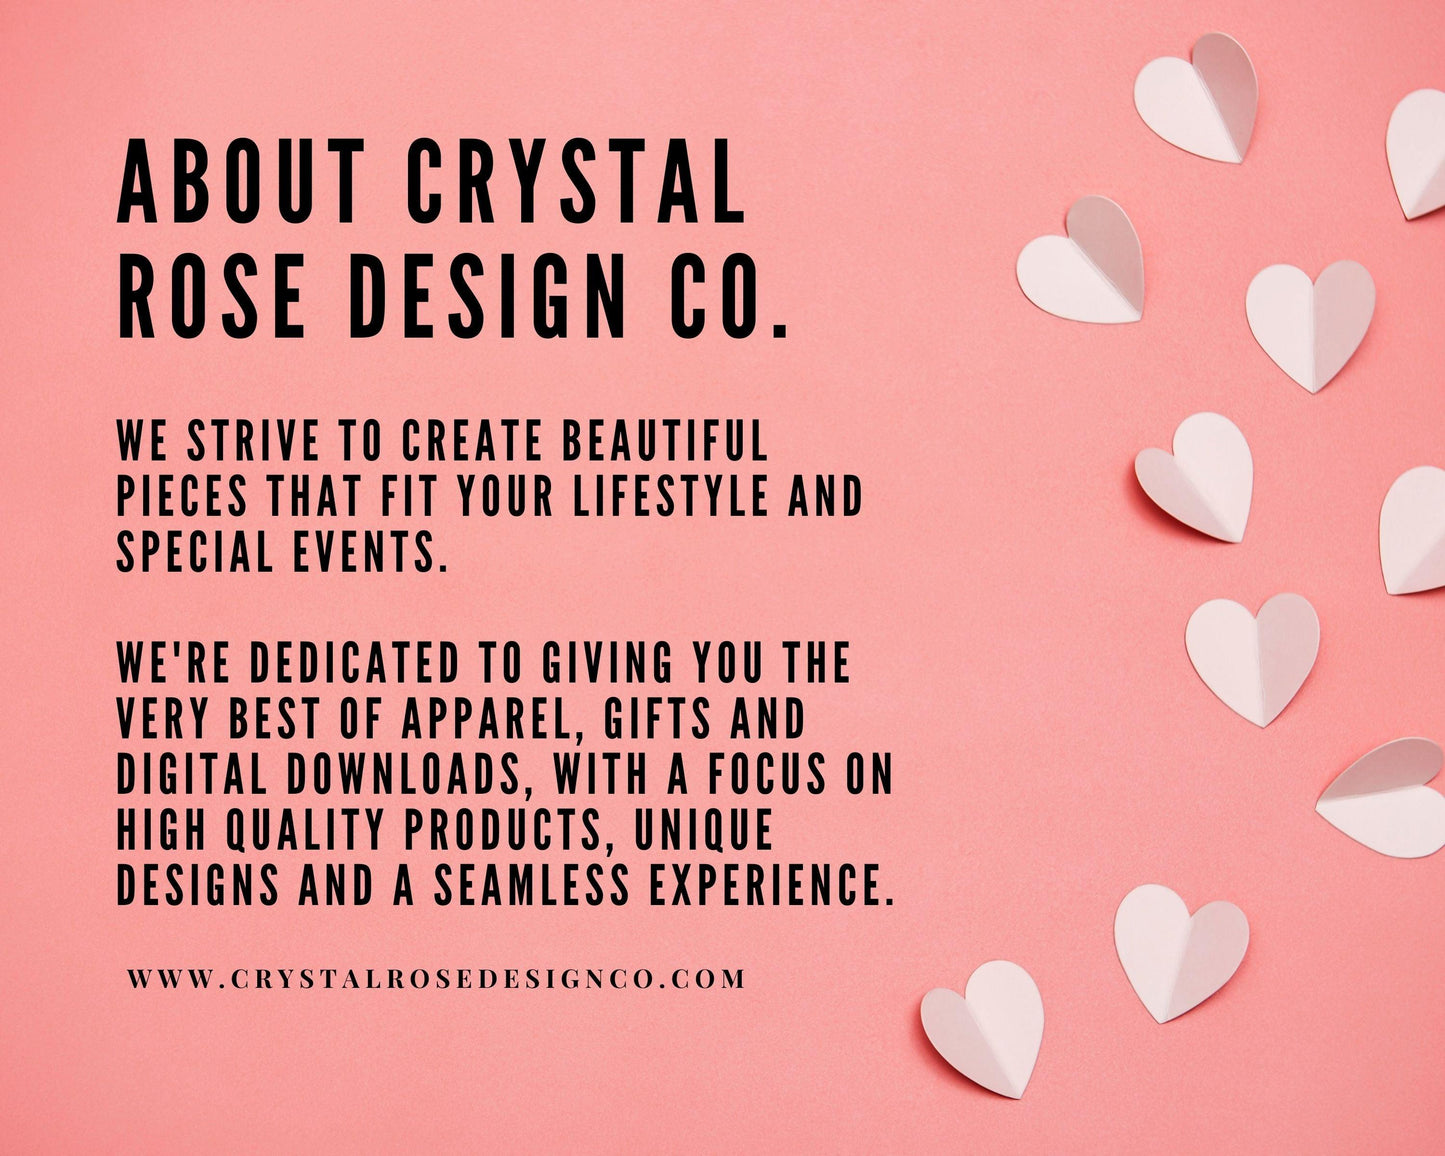 Future Mrs Bride Short Sleeve Tee - Crystal Rose Design Co.